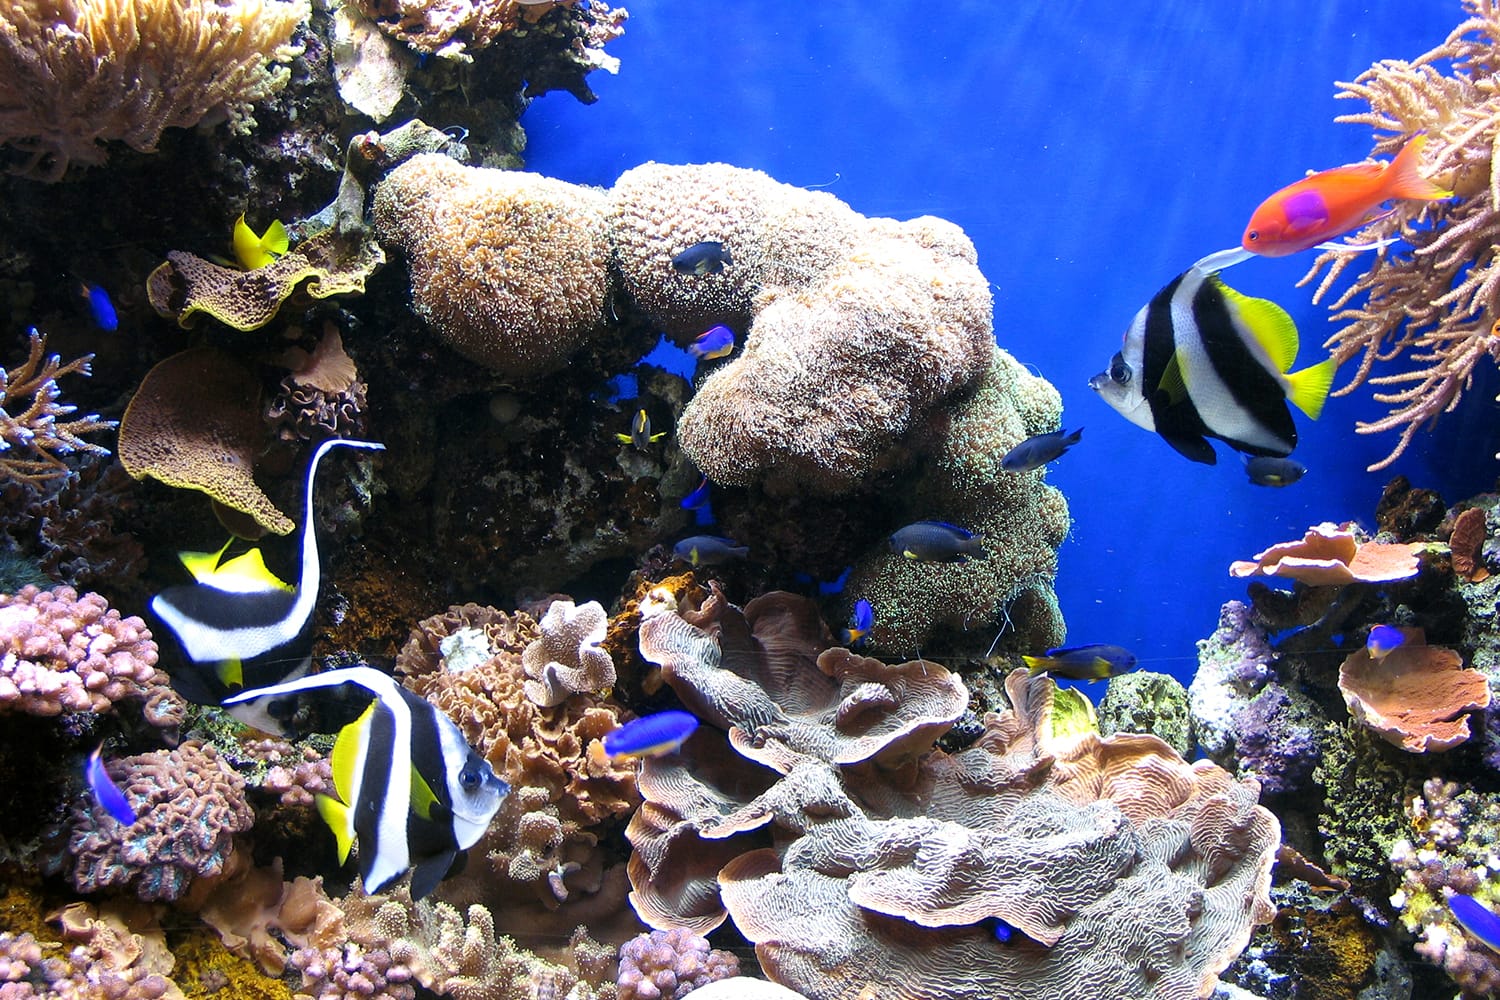 Coral and fish at the Monterey bay aquarium in Long Beach, California